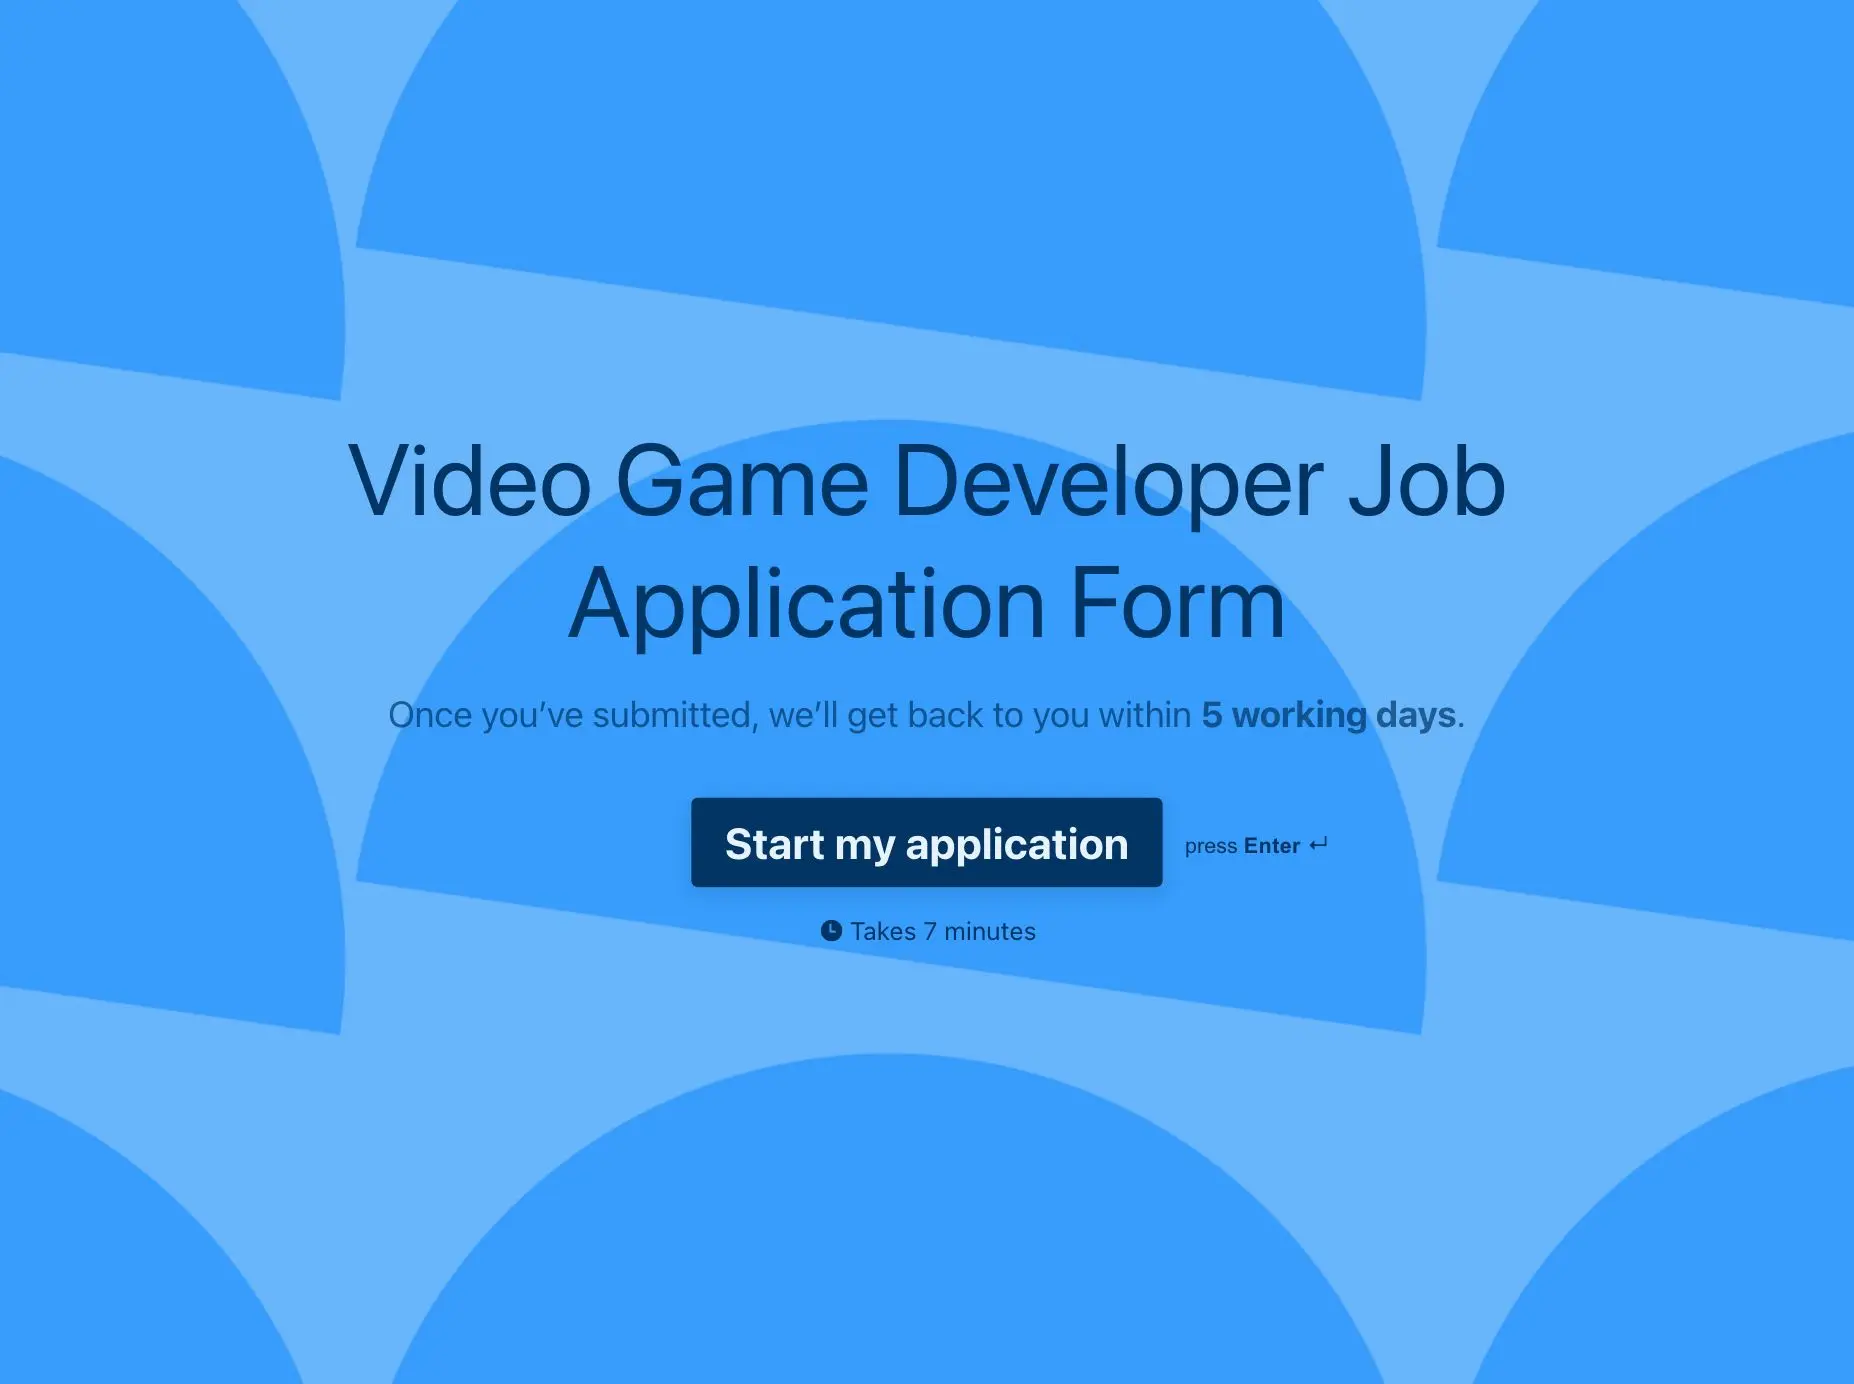 Video Game Developer Job Application Form Template Hero